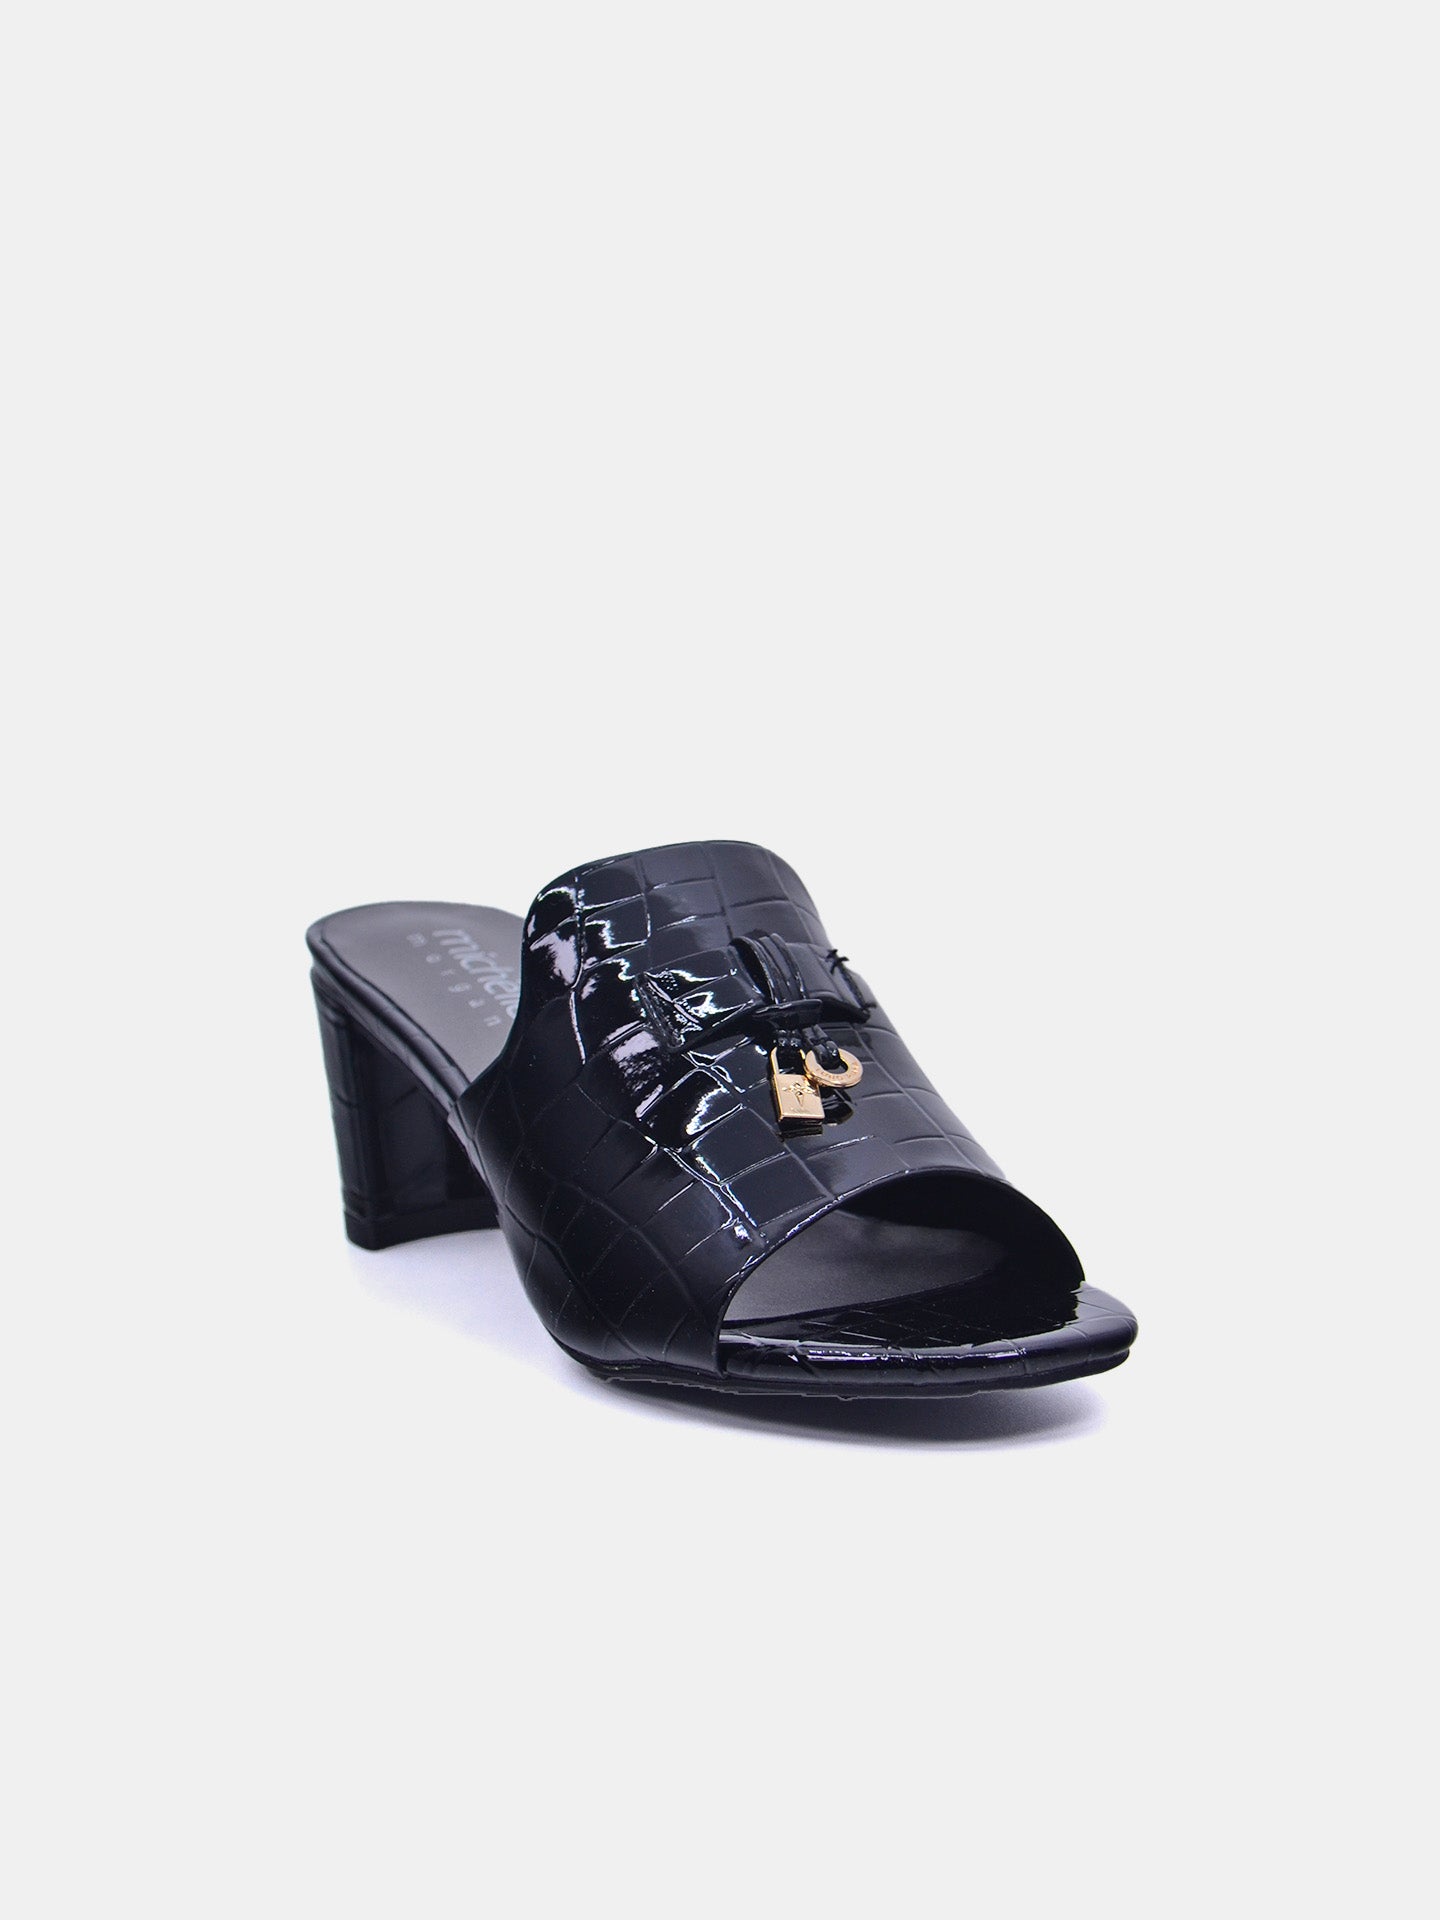 Michelle Morgan 213RC192 Women's Heeled Sandals #color_Black